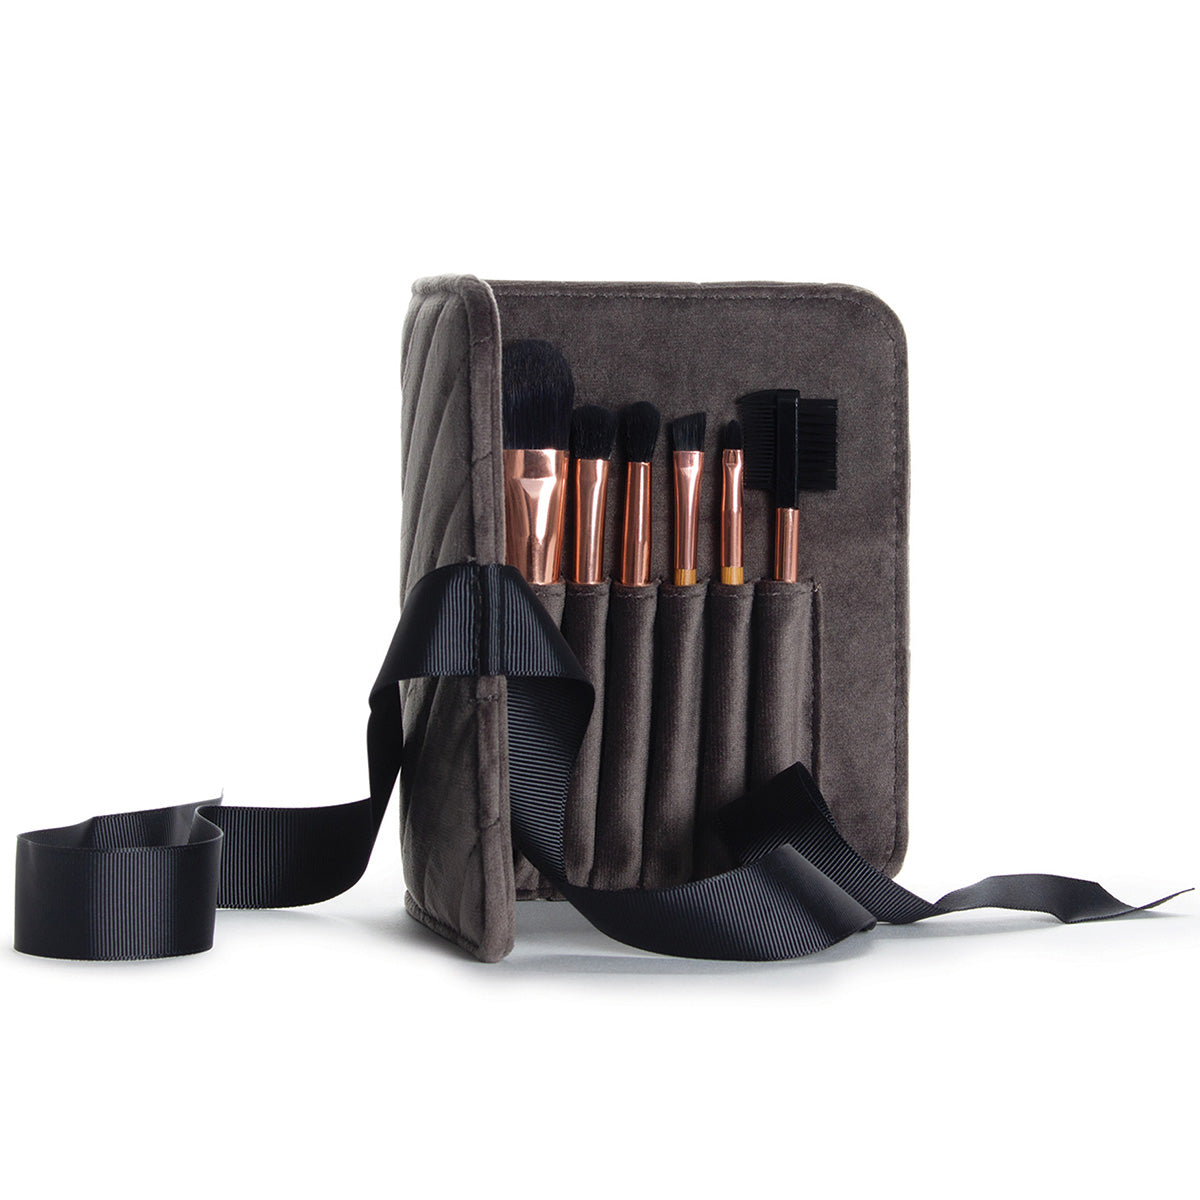 JET SETTIN’ - set of 6 makeup brushes